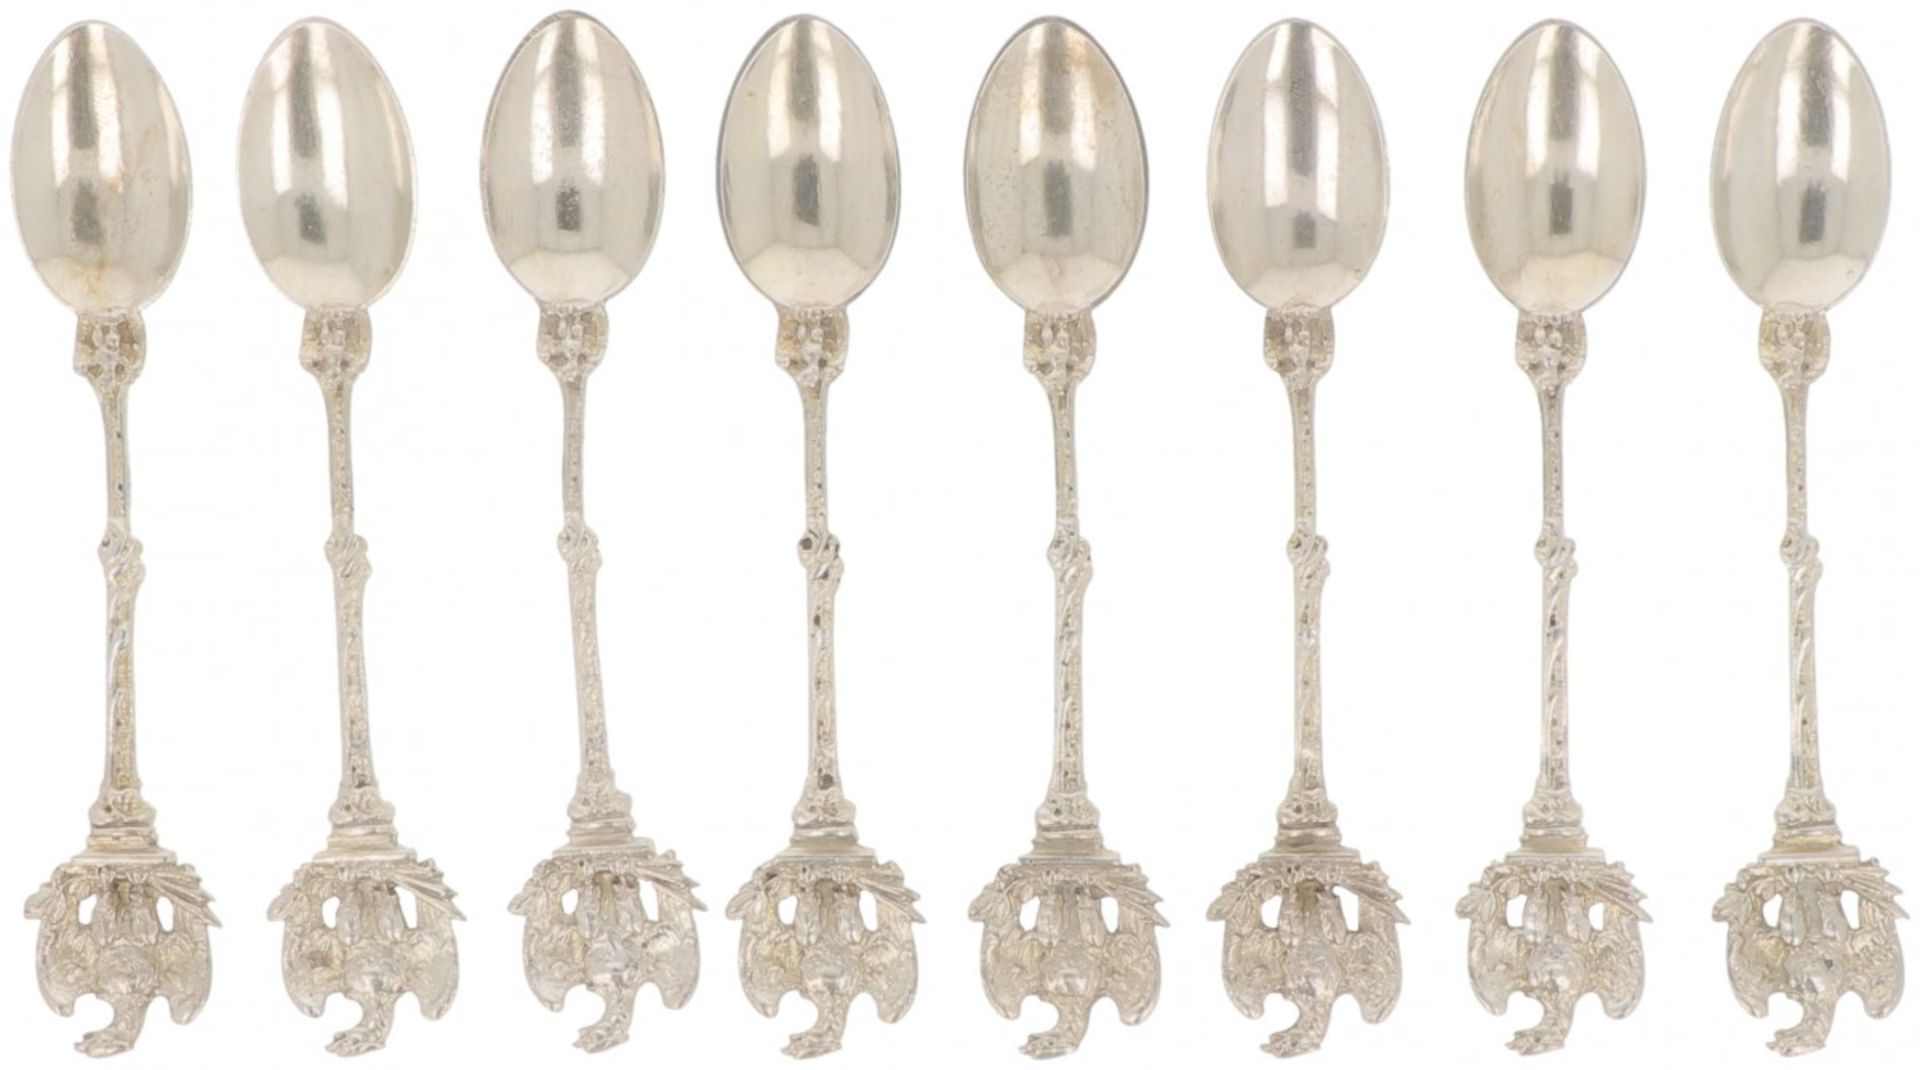 (8) piece set of silver teaspoons.